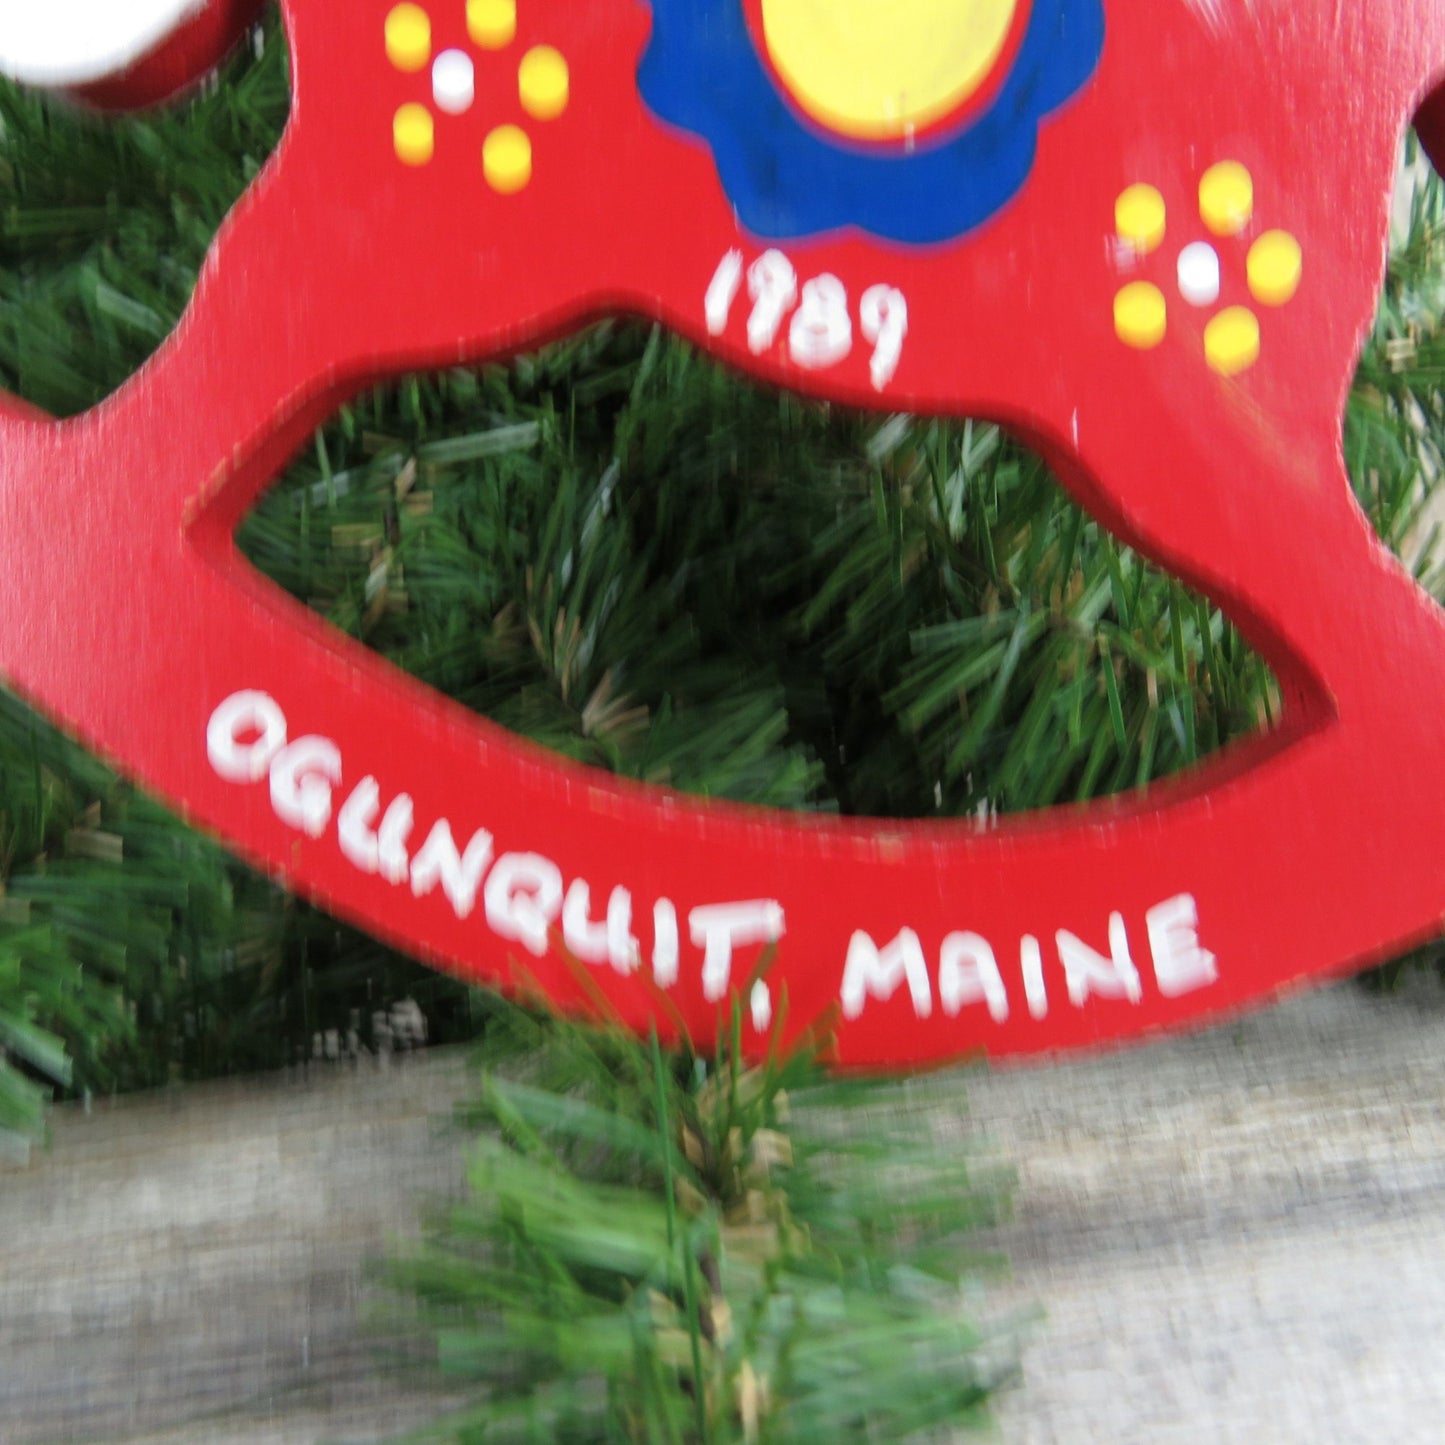 Vintage Rocking Horse Ogunquit Maine Wood Ornament Christmas Red Wooden Souvenir Tourist